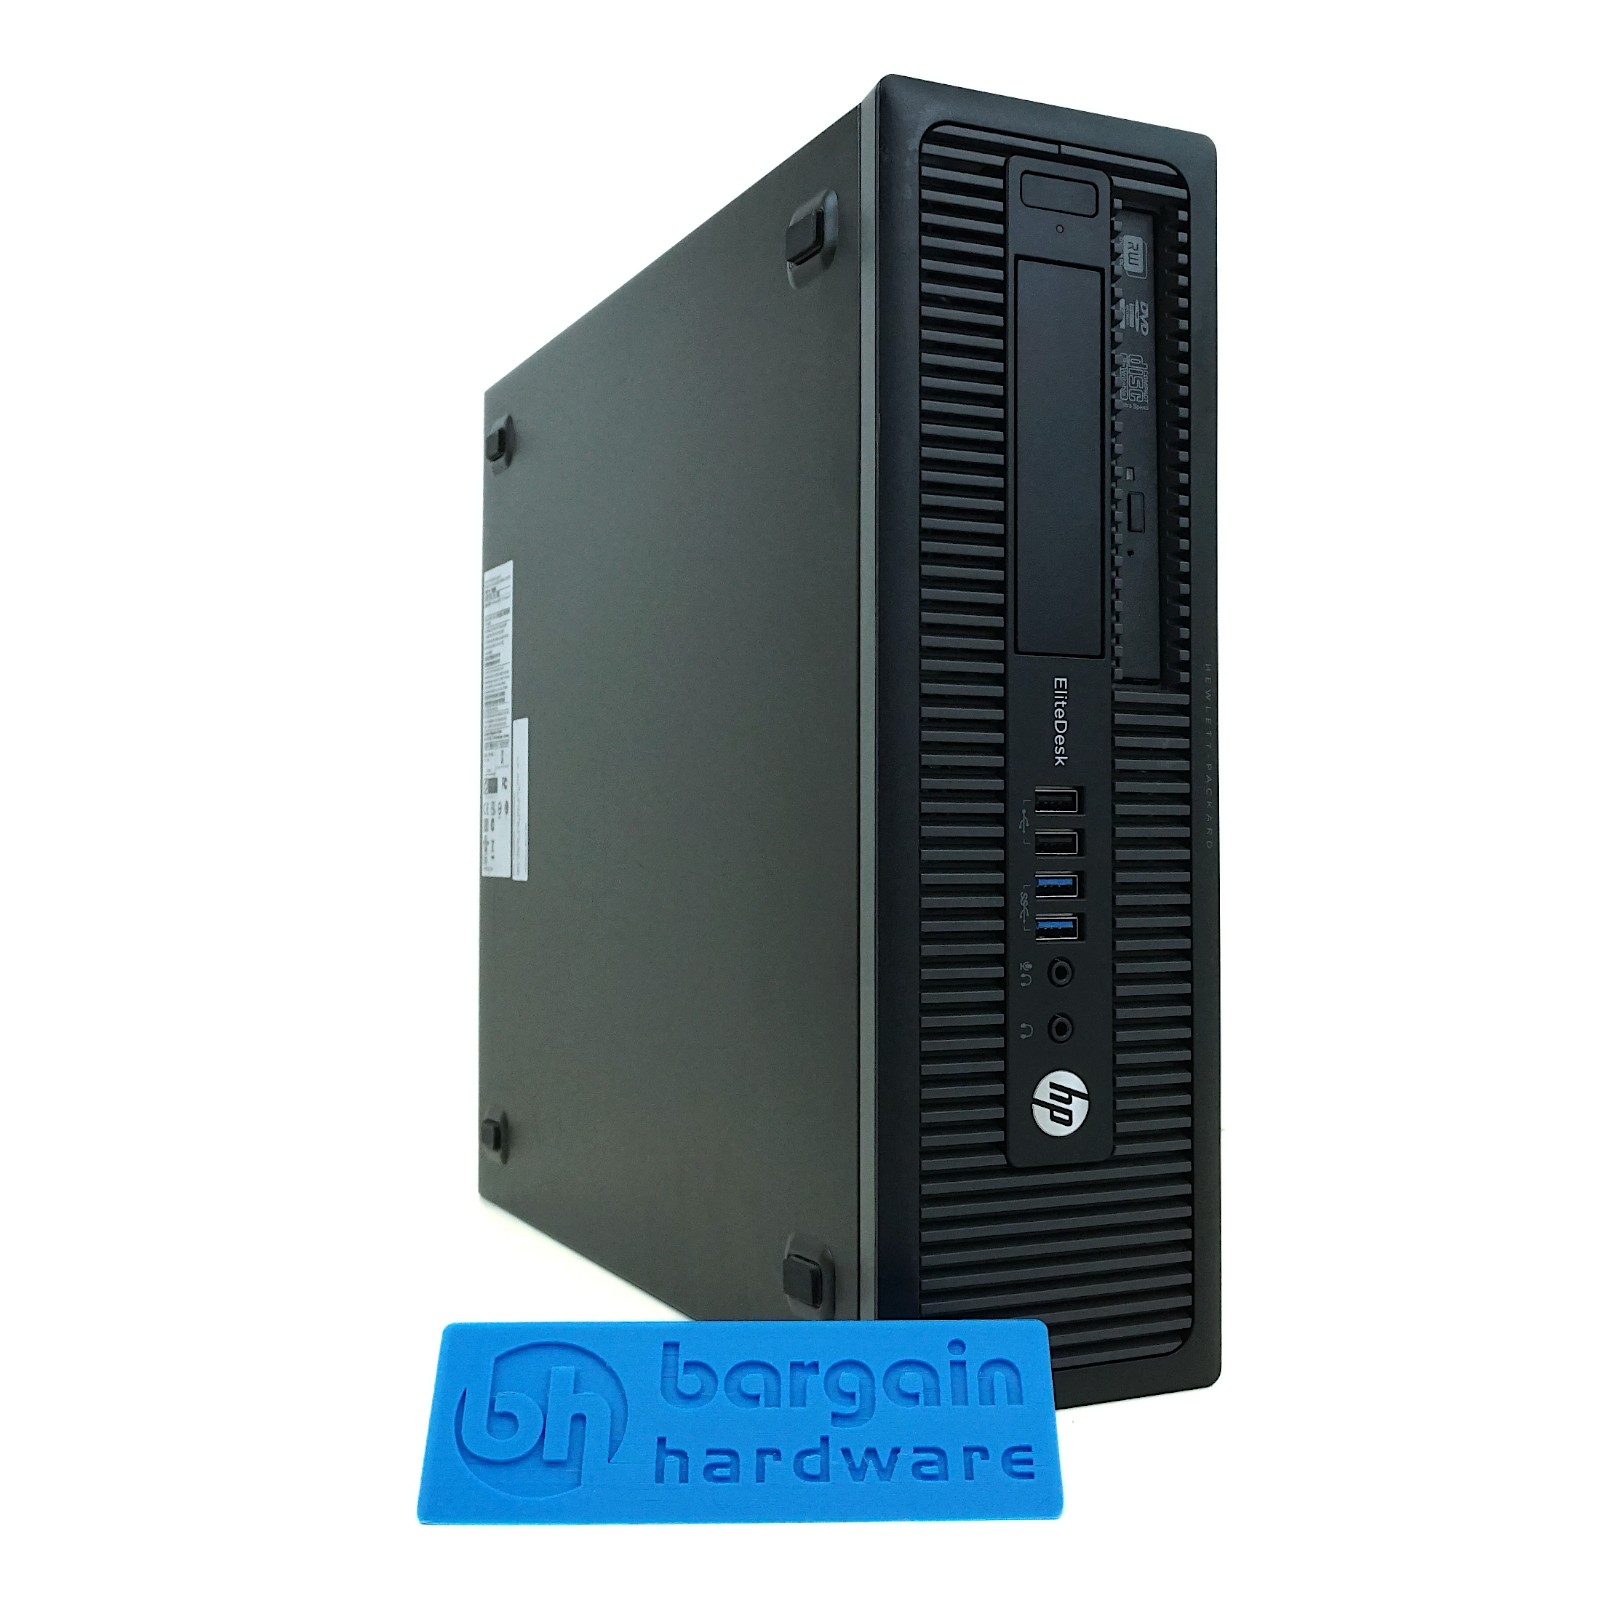 HP EliteDesk 800 G1 SFF Desktop PC | Configure To Order